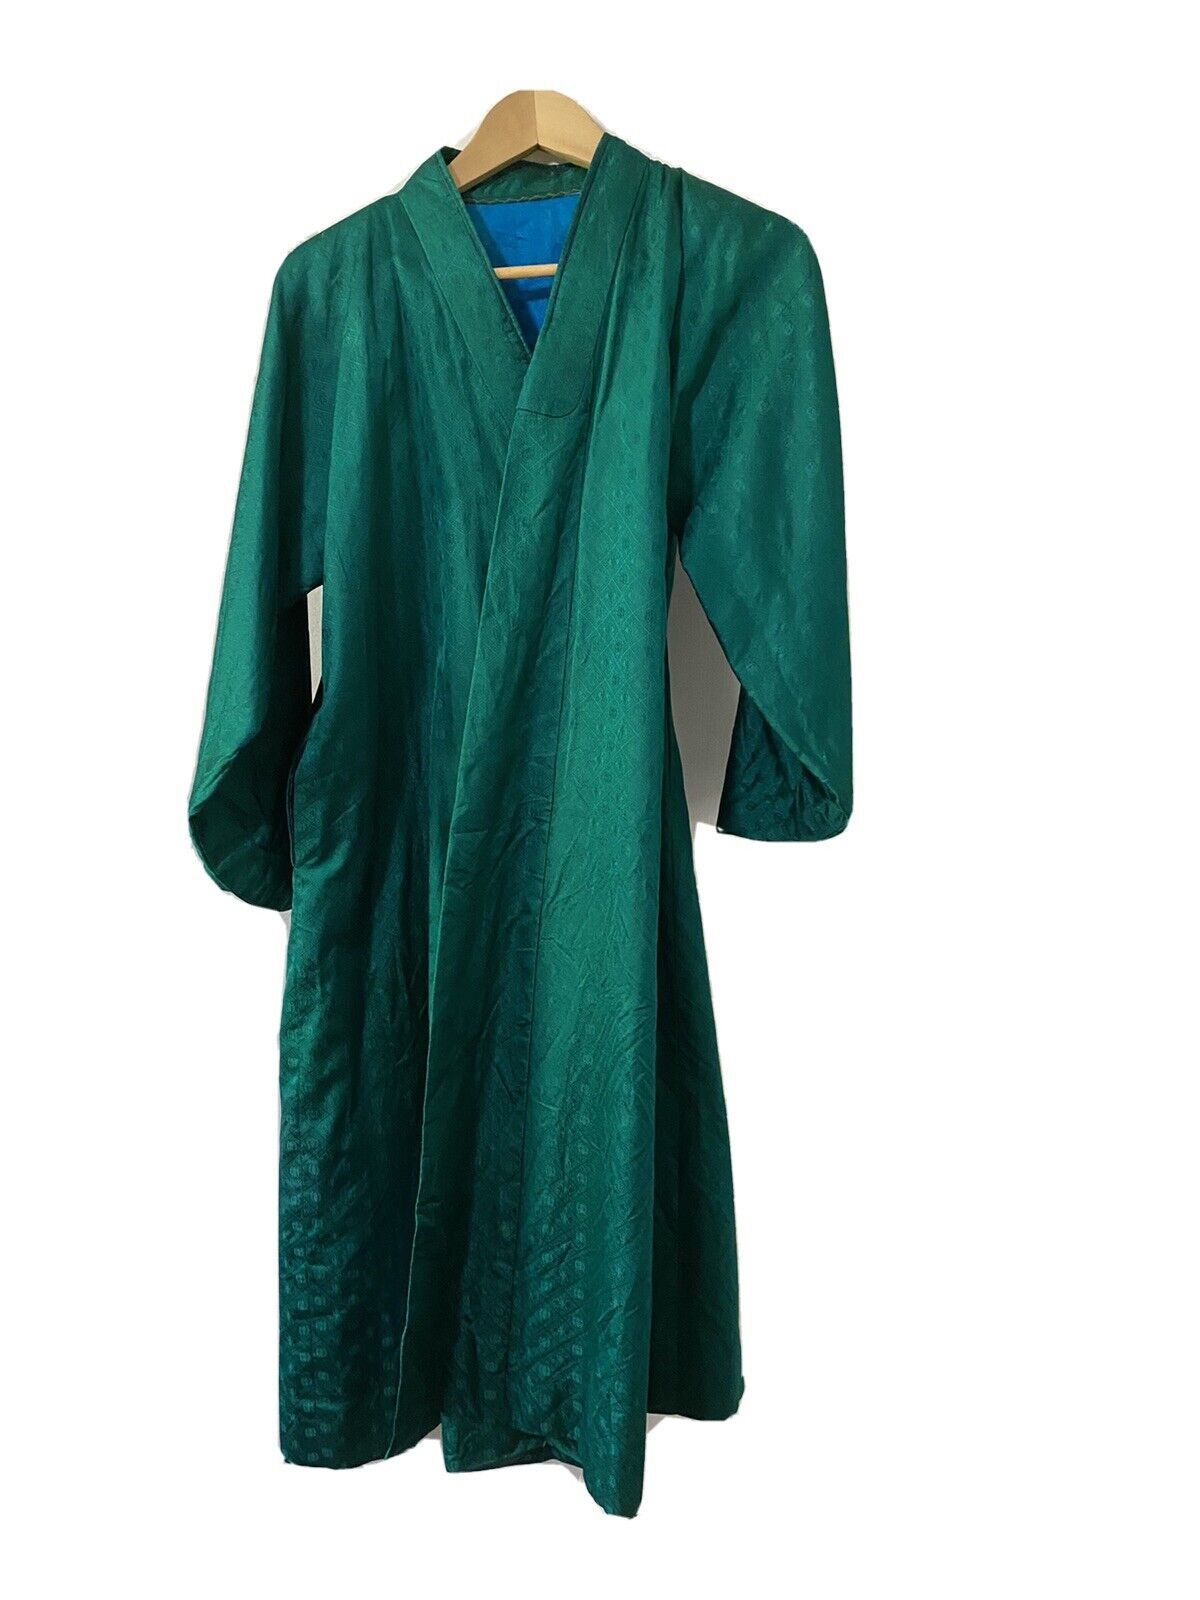 Vintage Lined Silk Robe Kimono, Emerald Green, Inside Bright Blue Made In Korea